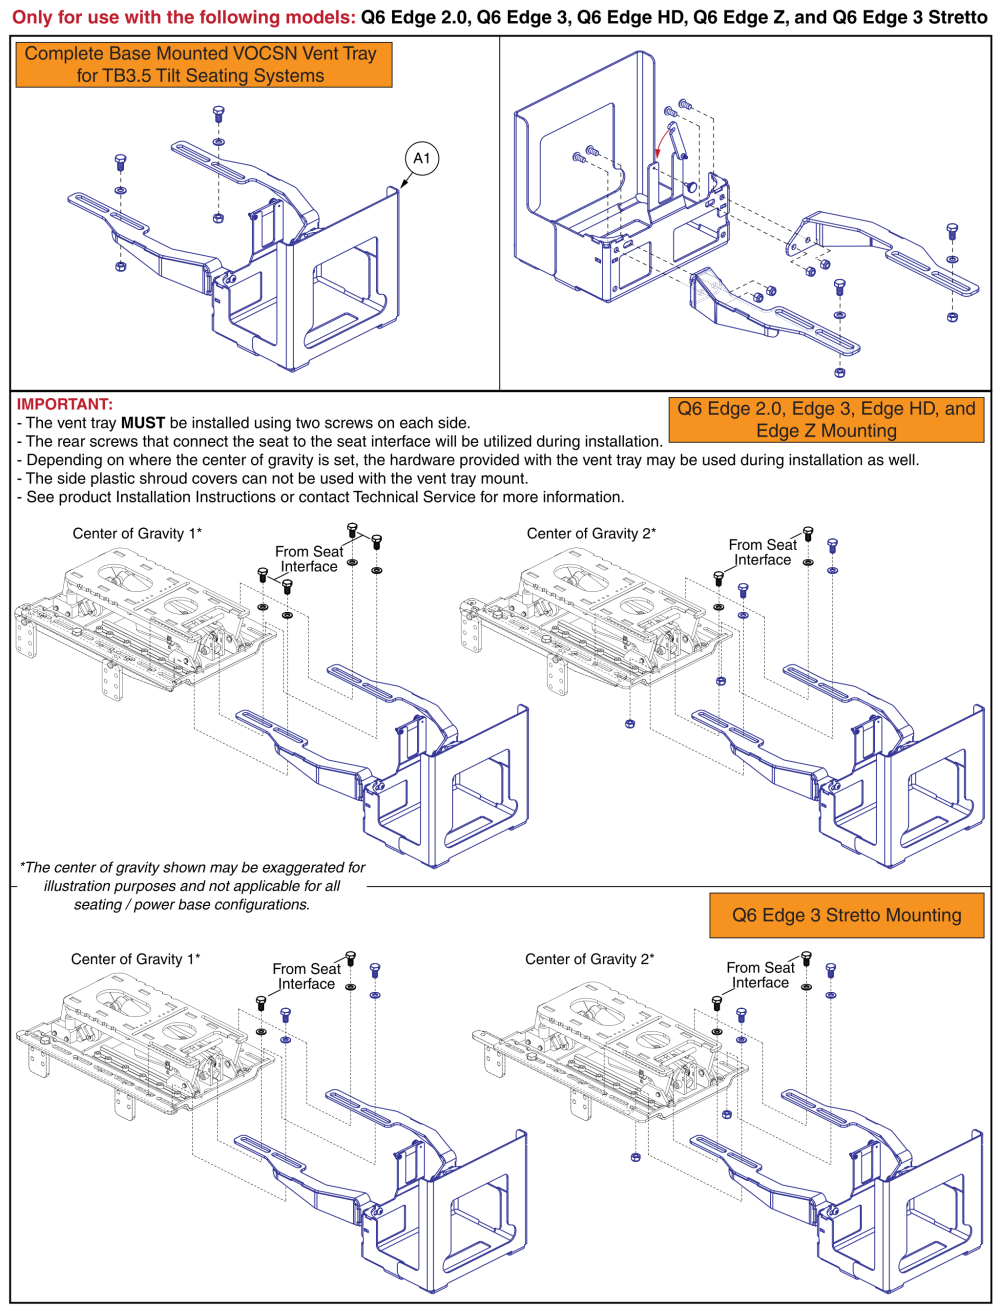 Vocsn Vent Tray For Tb3.5 Tilt Seating - Q6 Edge 2.0, 3, Hd, Z, & Stretto parts diagram